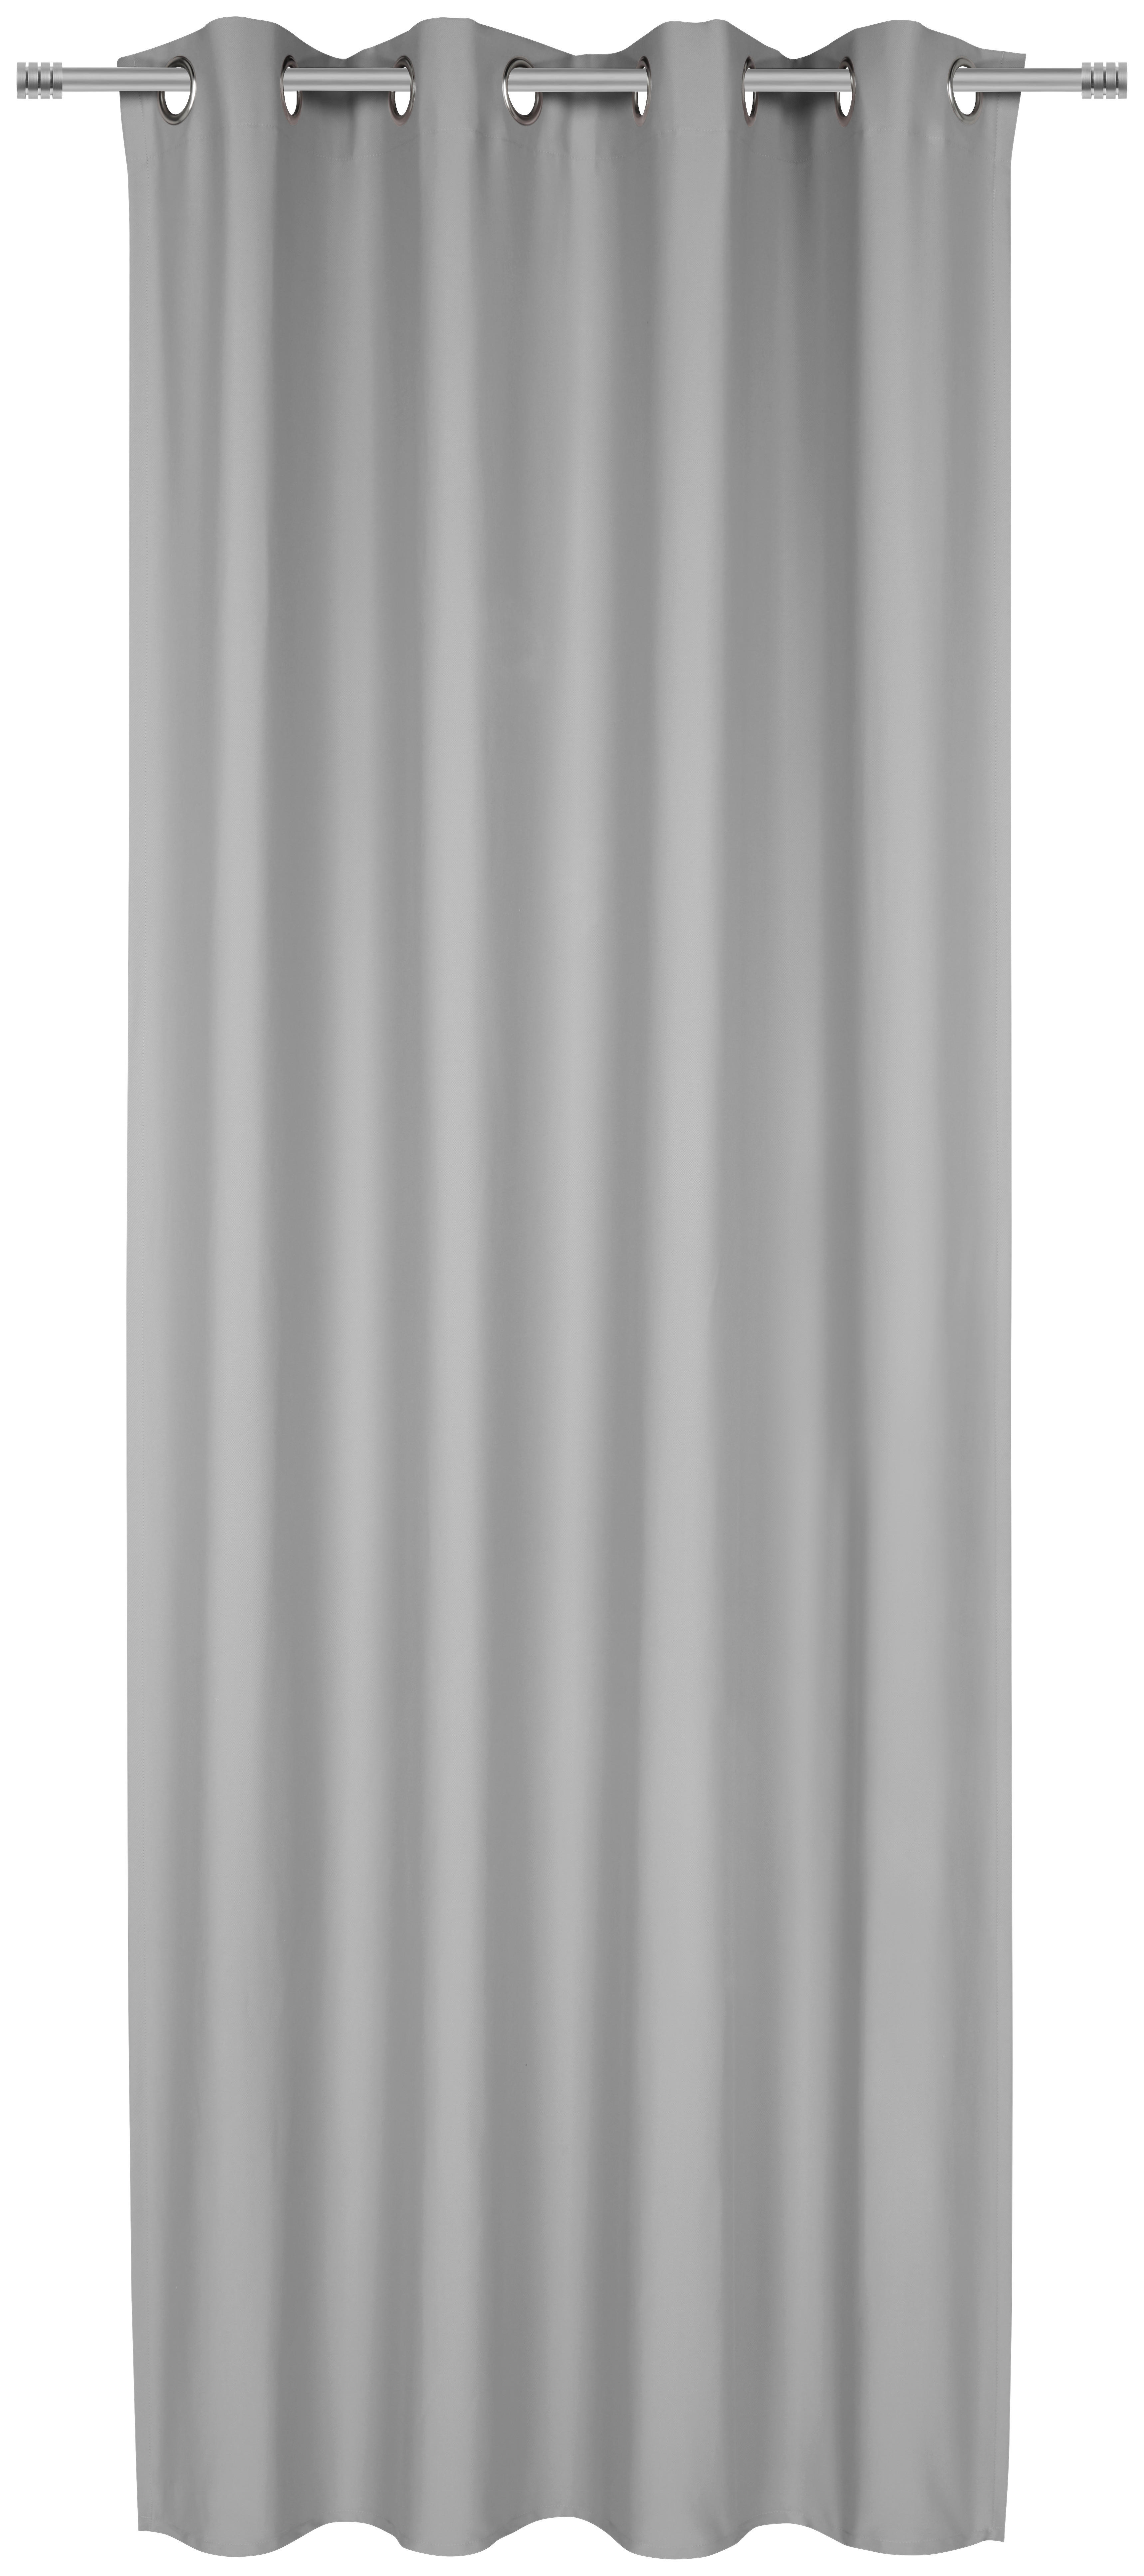 ÖLJETTLÄNGD ej transparent  - grå, Basics, textil (140/245cm) - Esposa